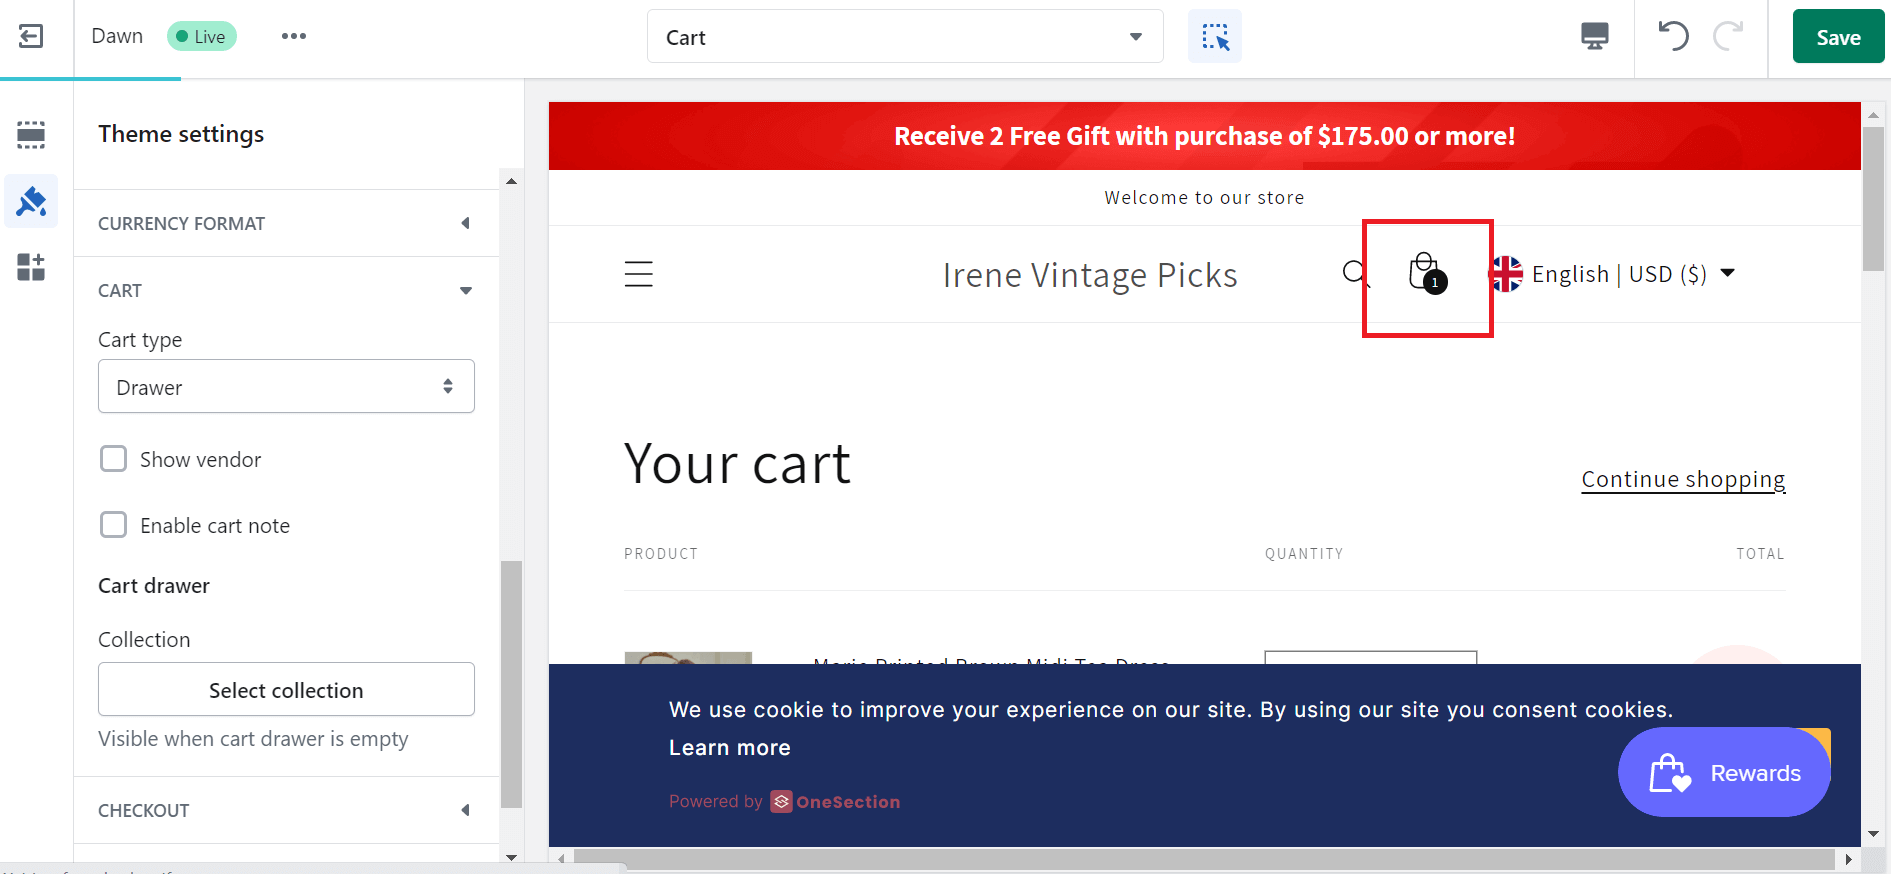 Shopify checkout optimization tips - Leave shopping cart open